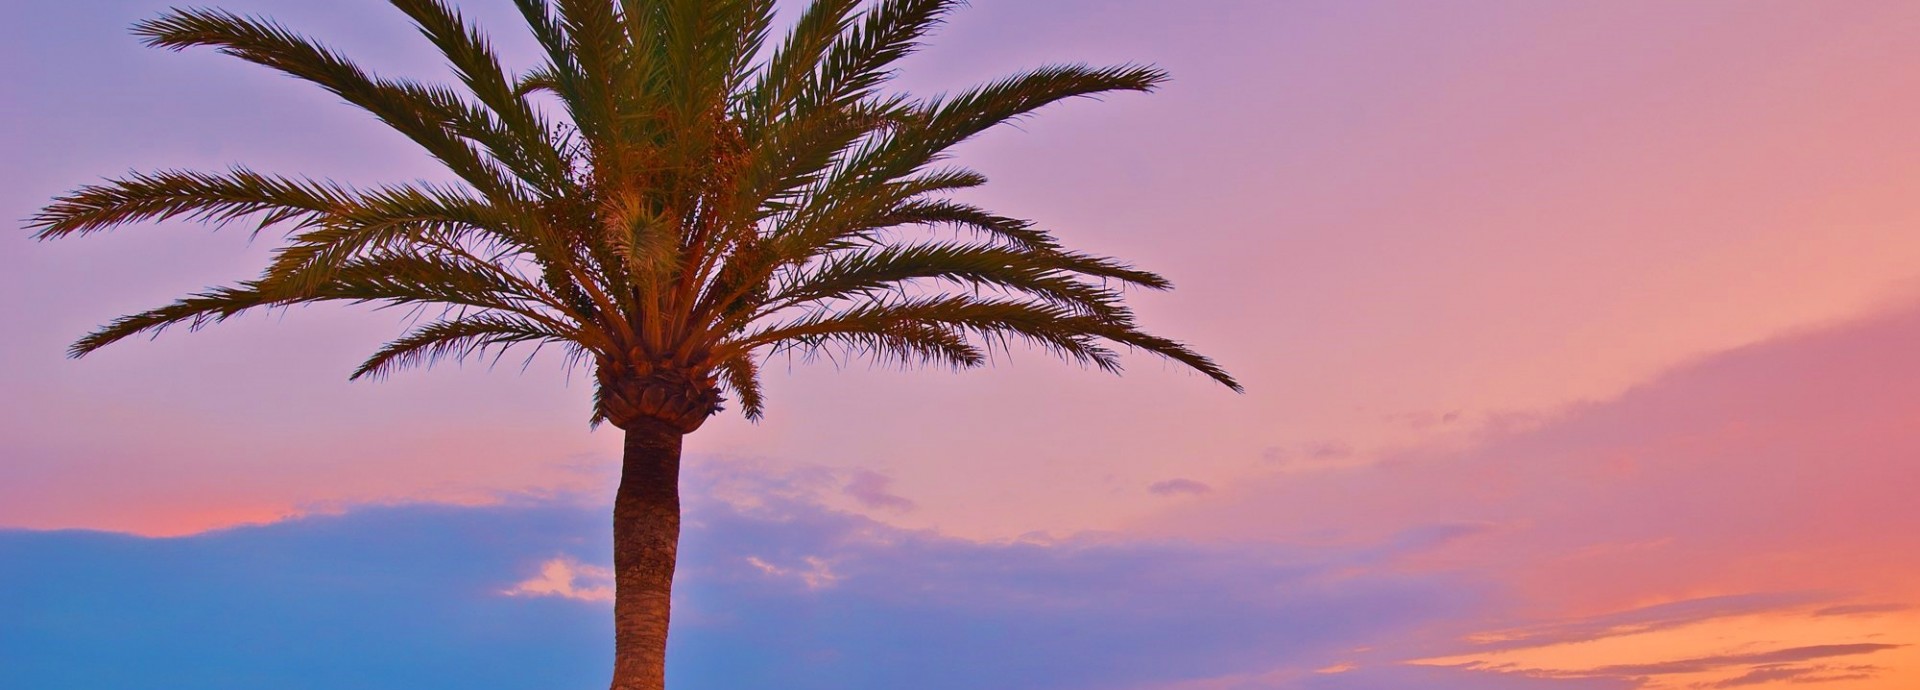 Palm tree in Palma